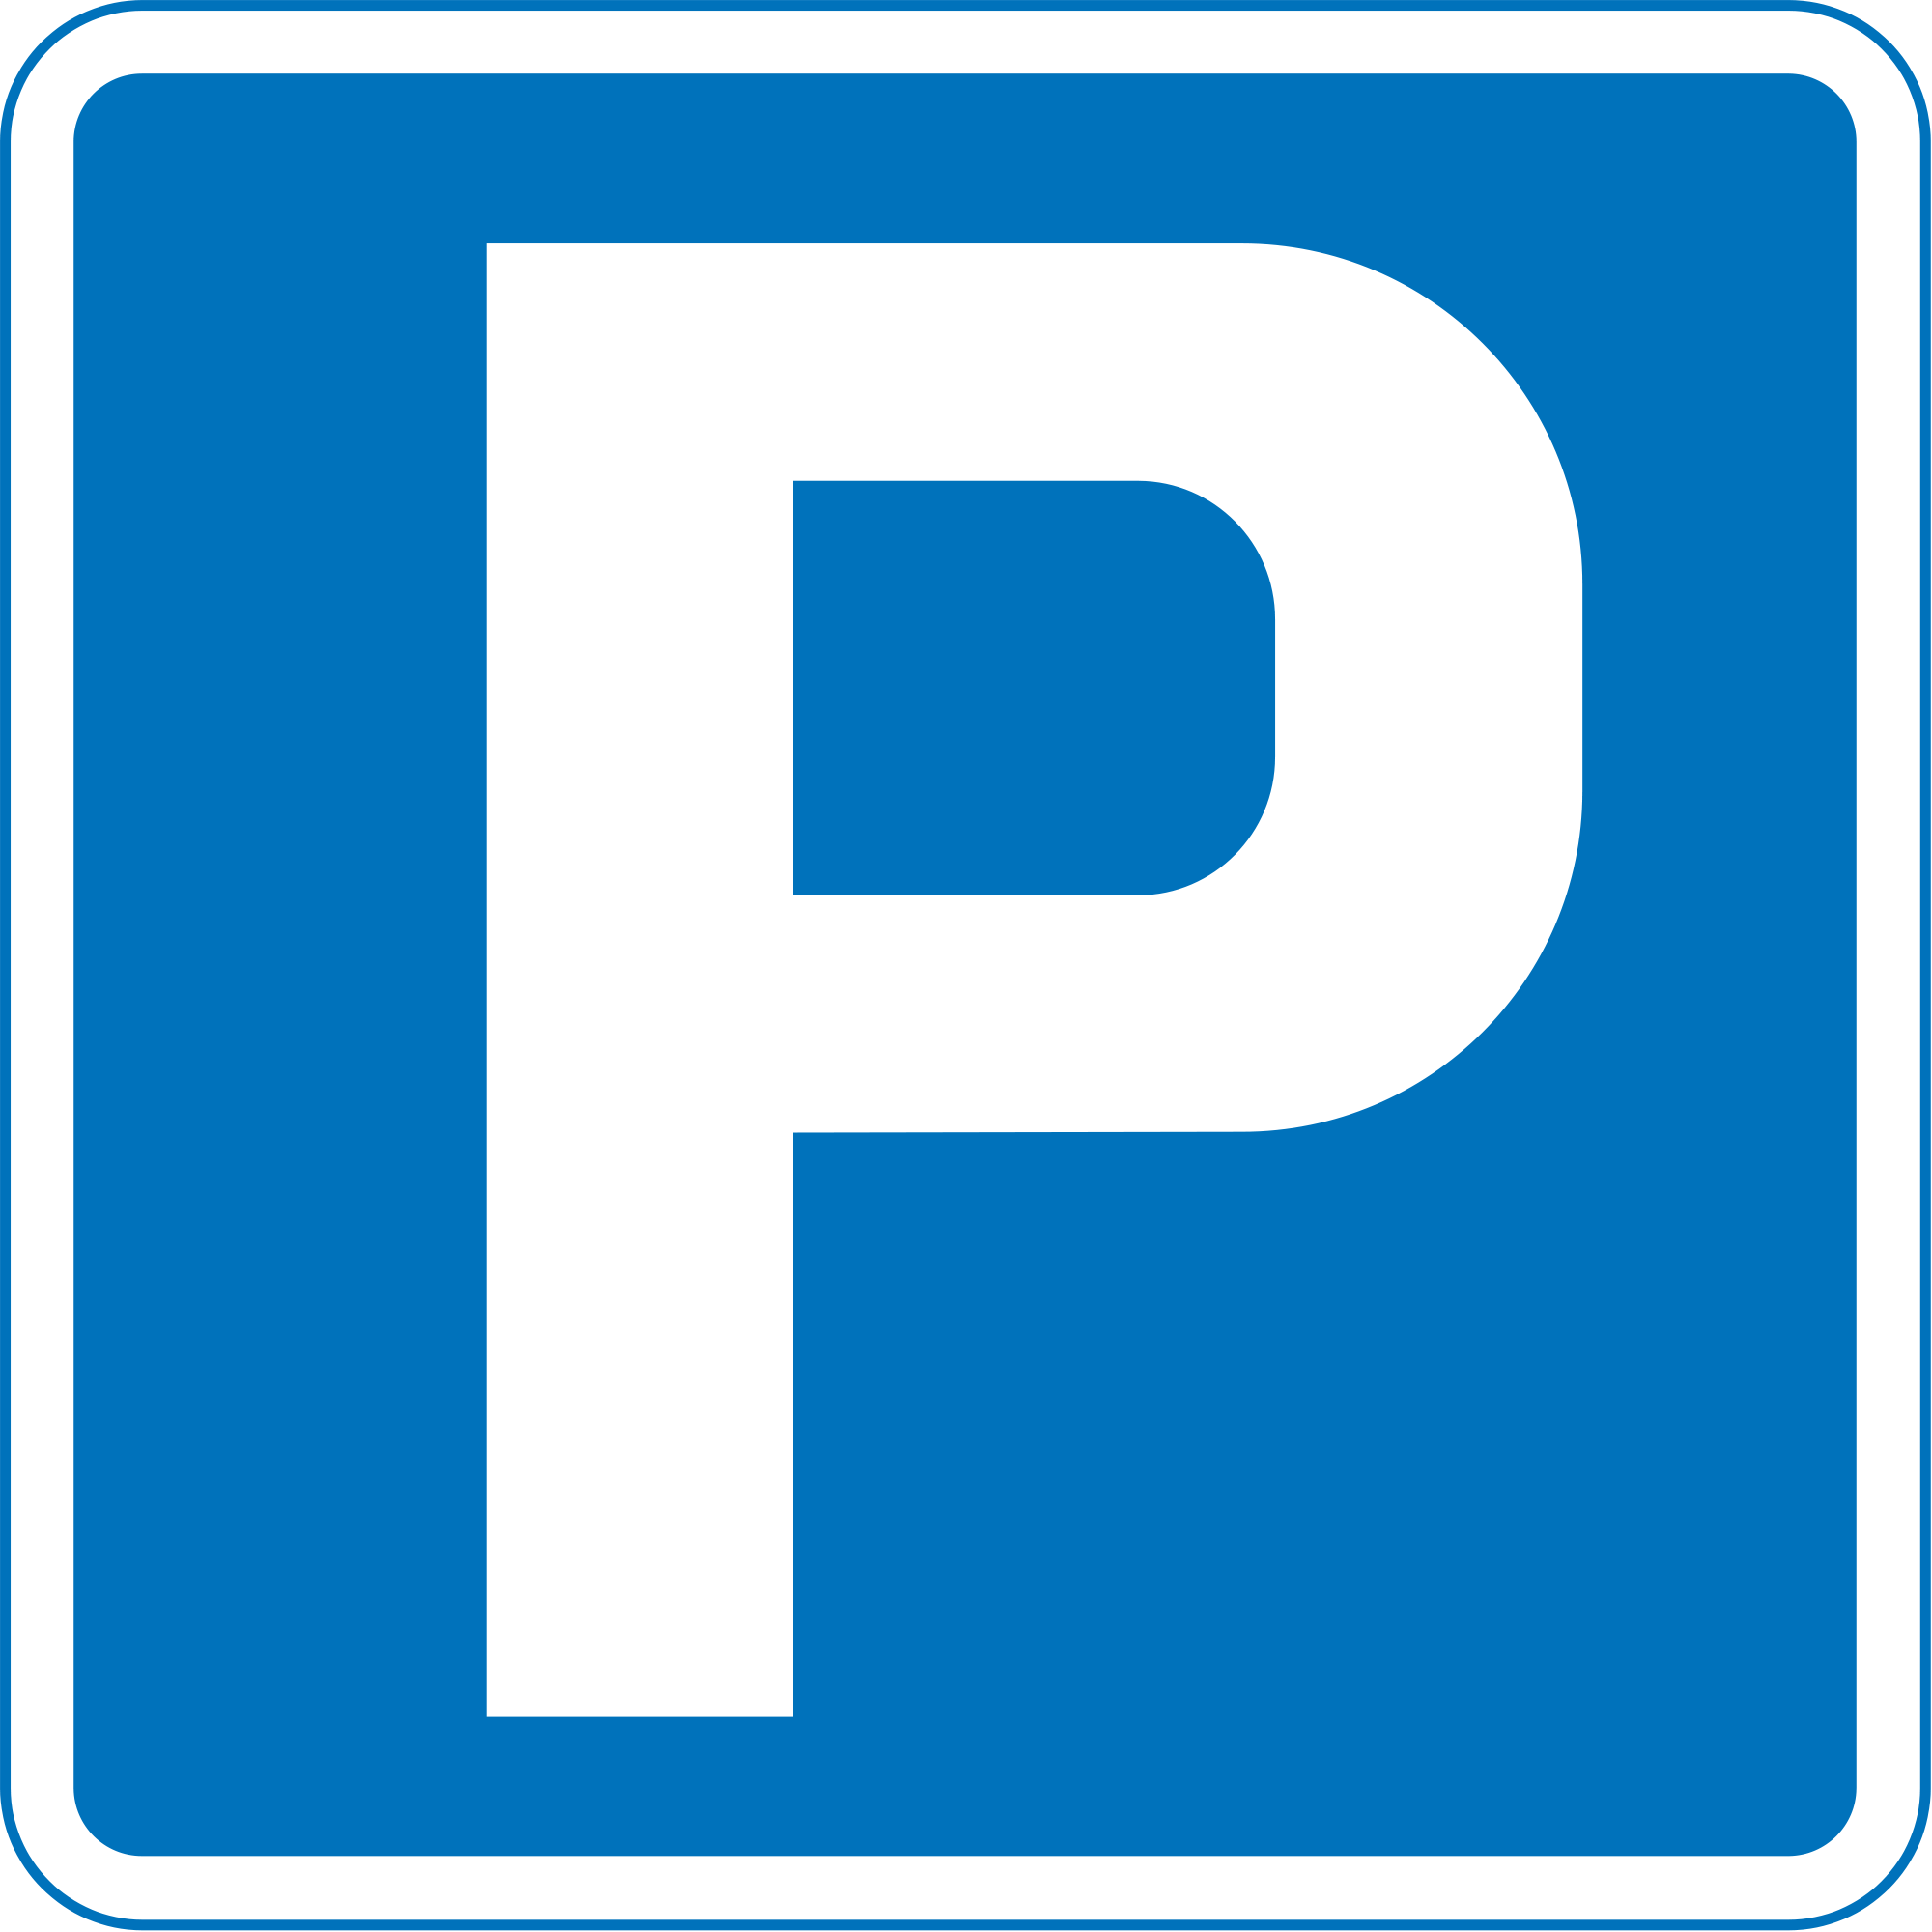 Parking
